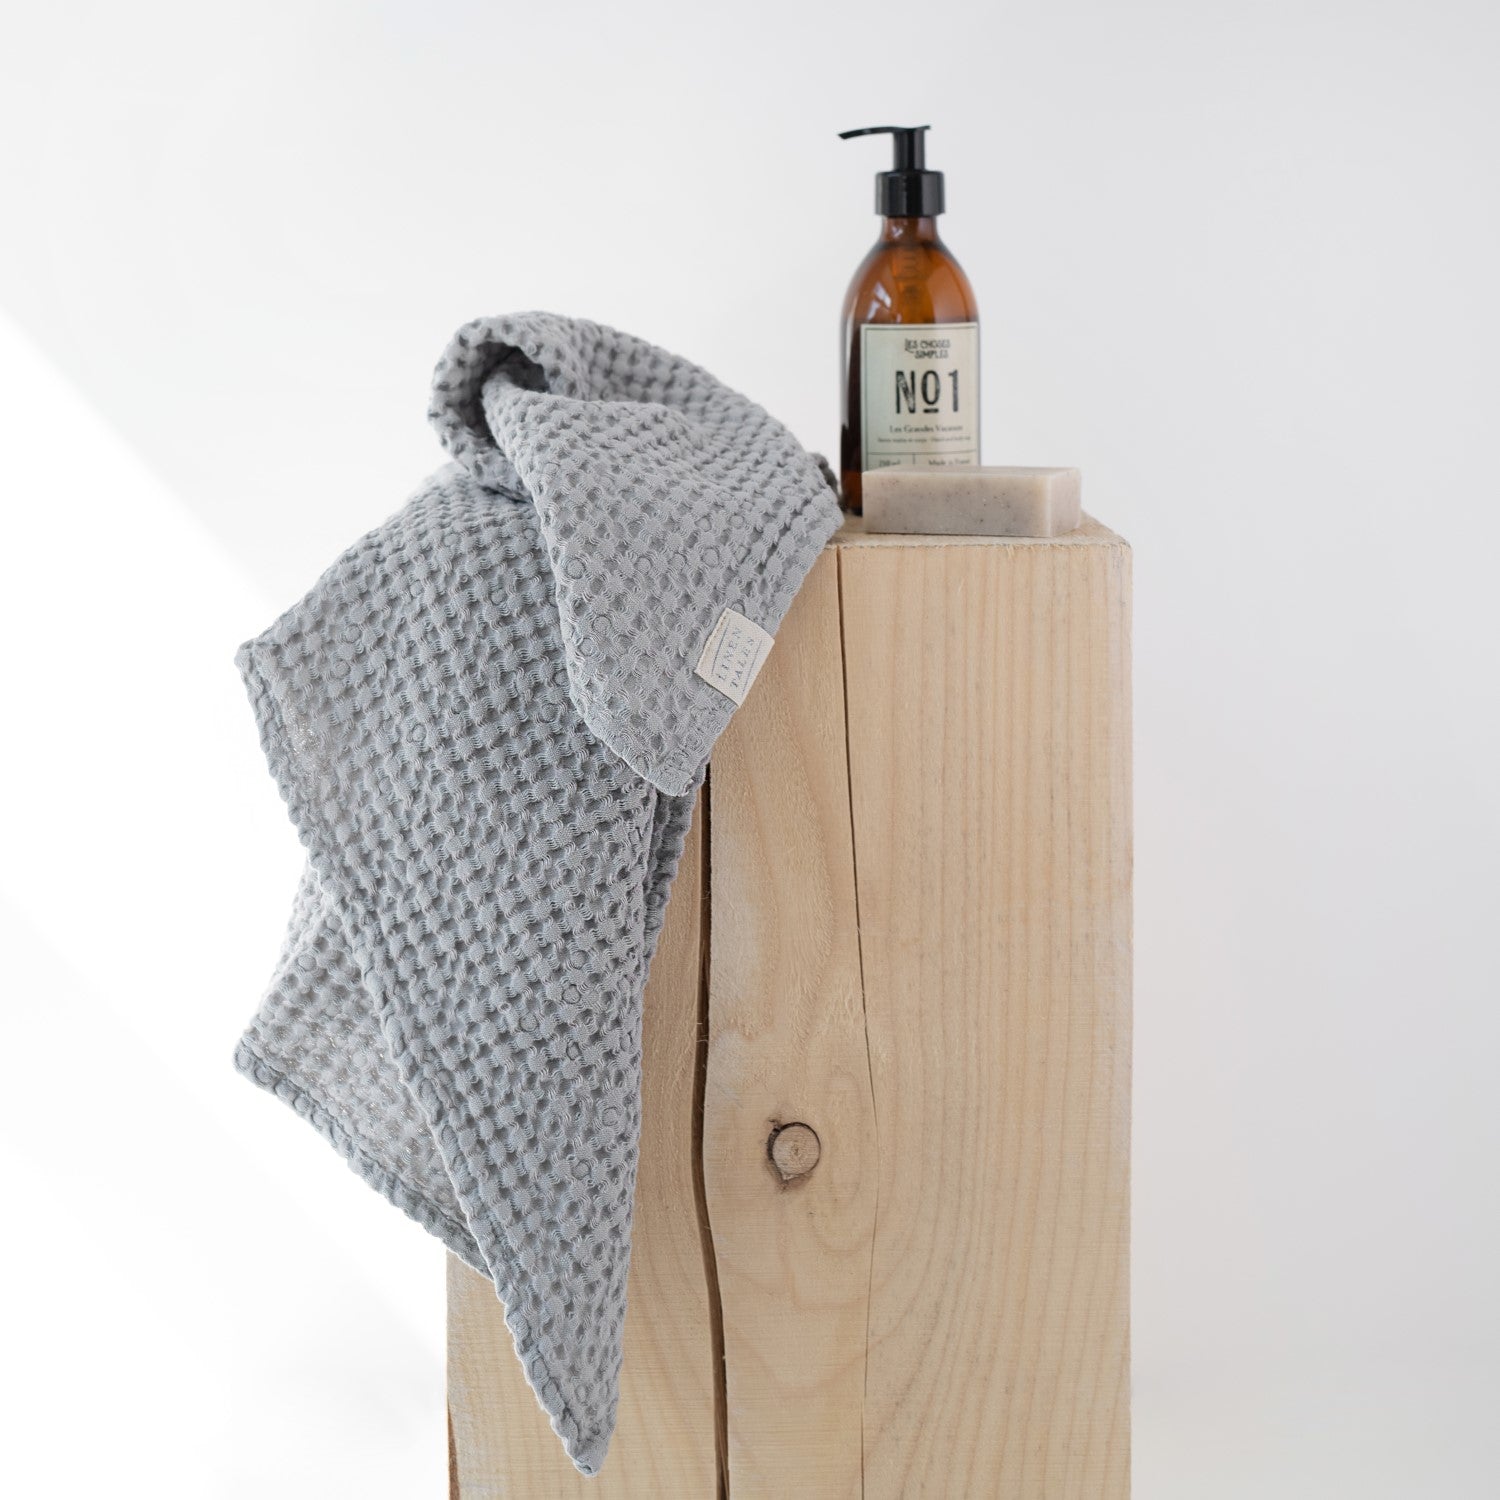 Morella WaffleLush Linen Suite - Spa-Grade Honeycomb Towel Set